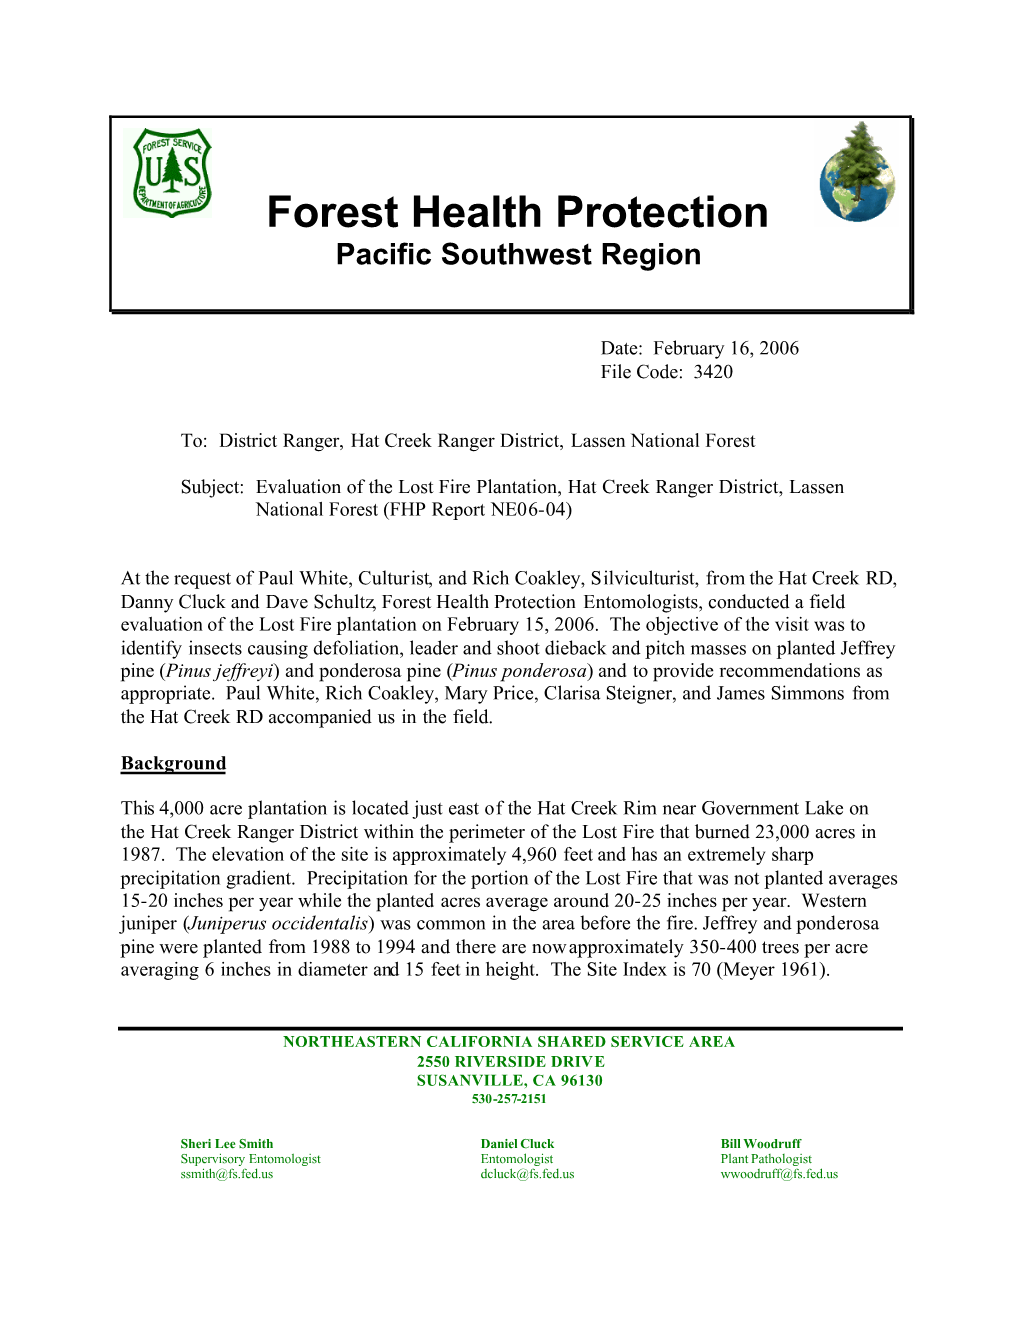 Evaluation of the Lost Fire Plantation, Hat Creek Ranger District, Lassen National Forest (FHP Report NE06-04)